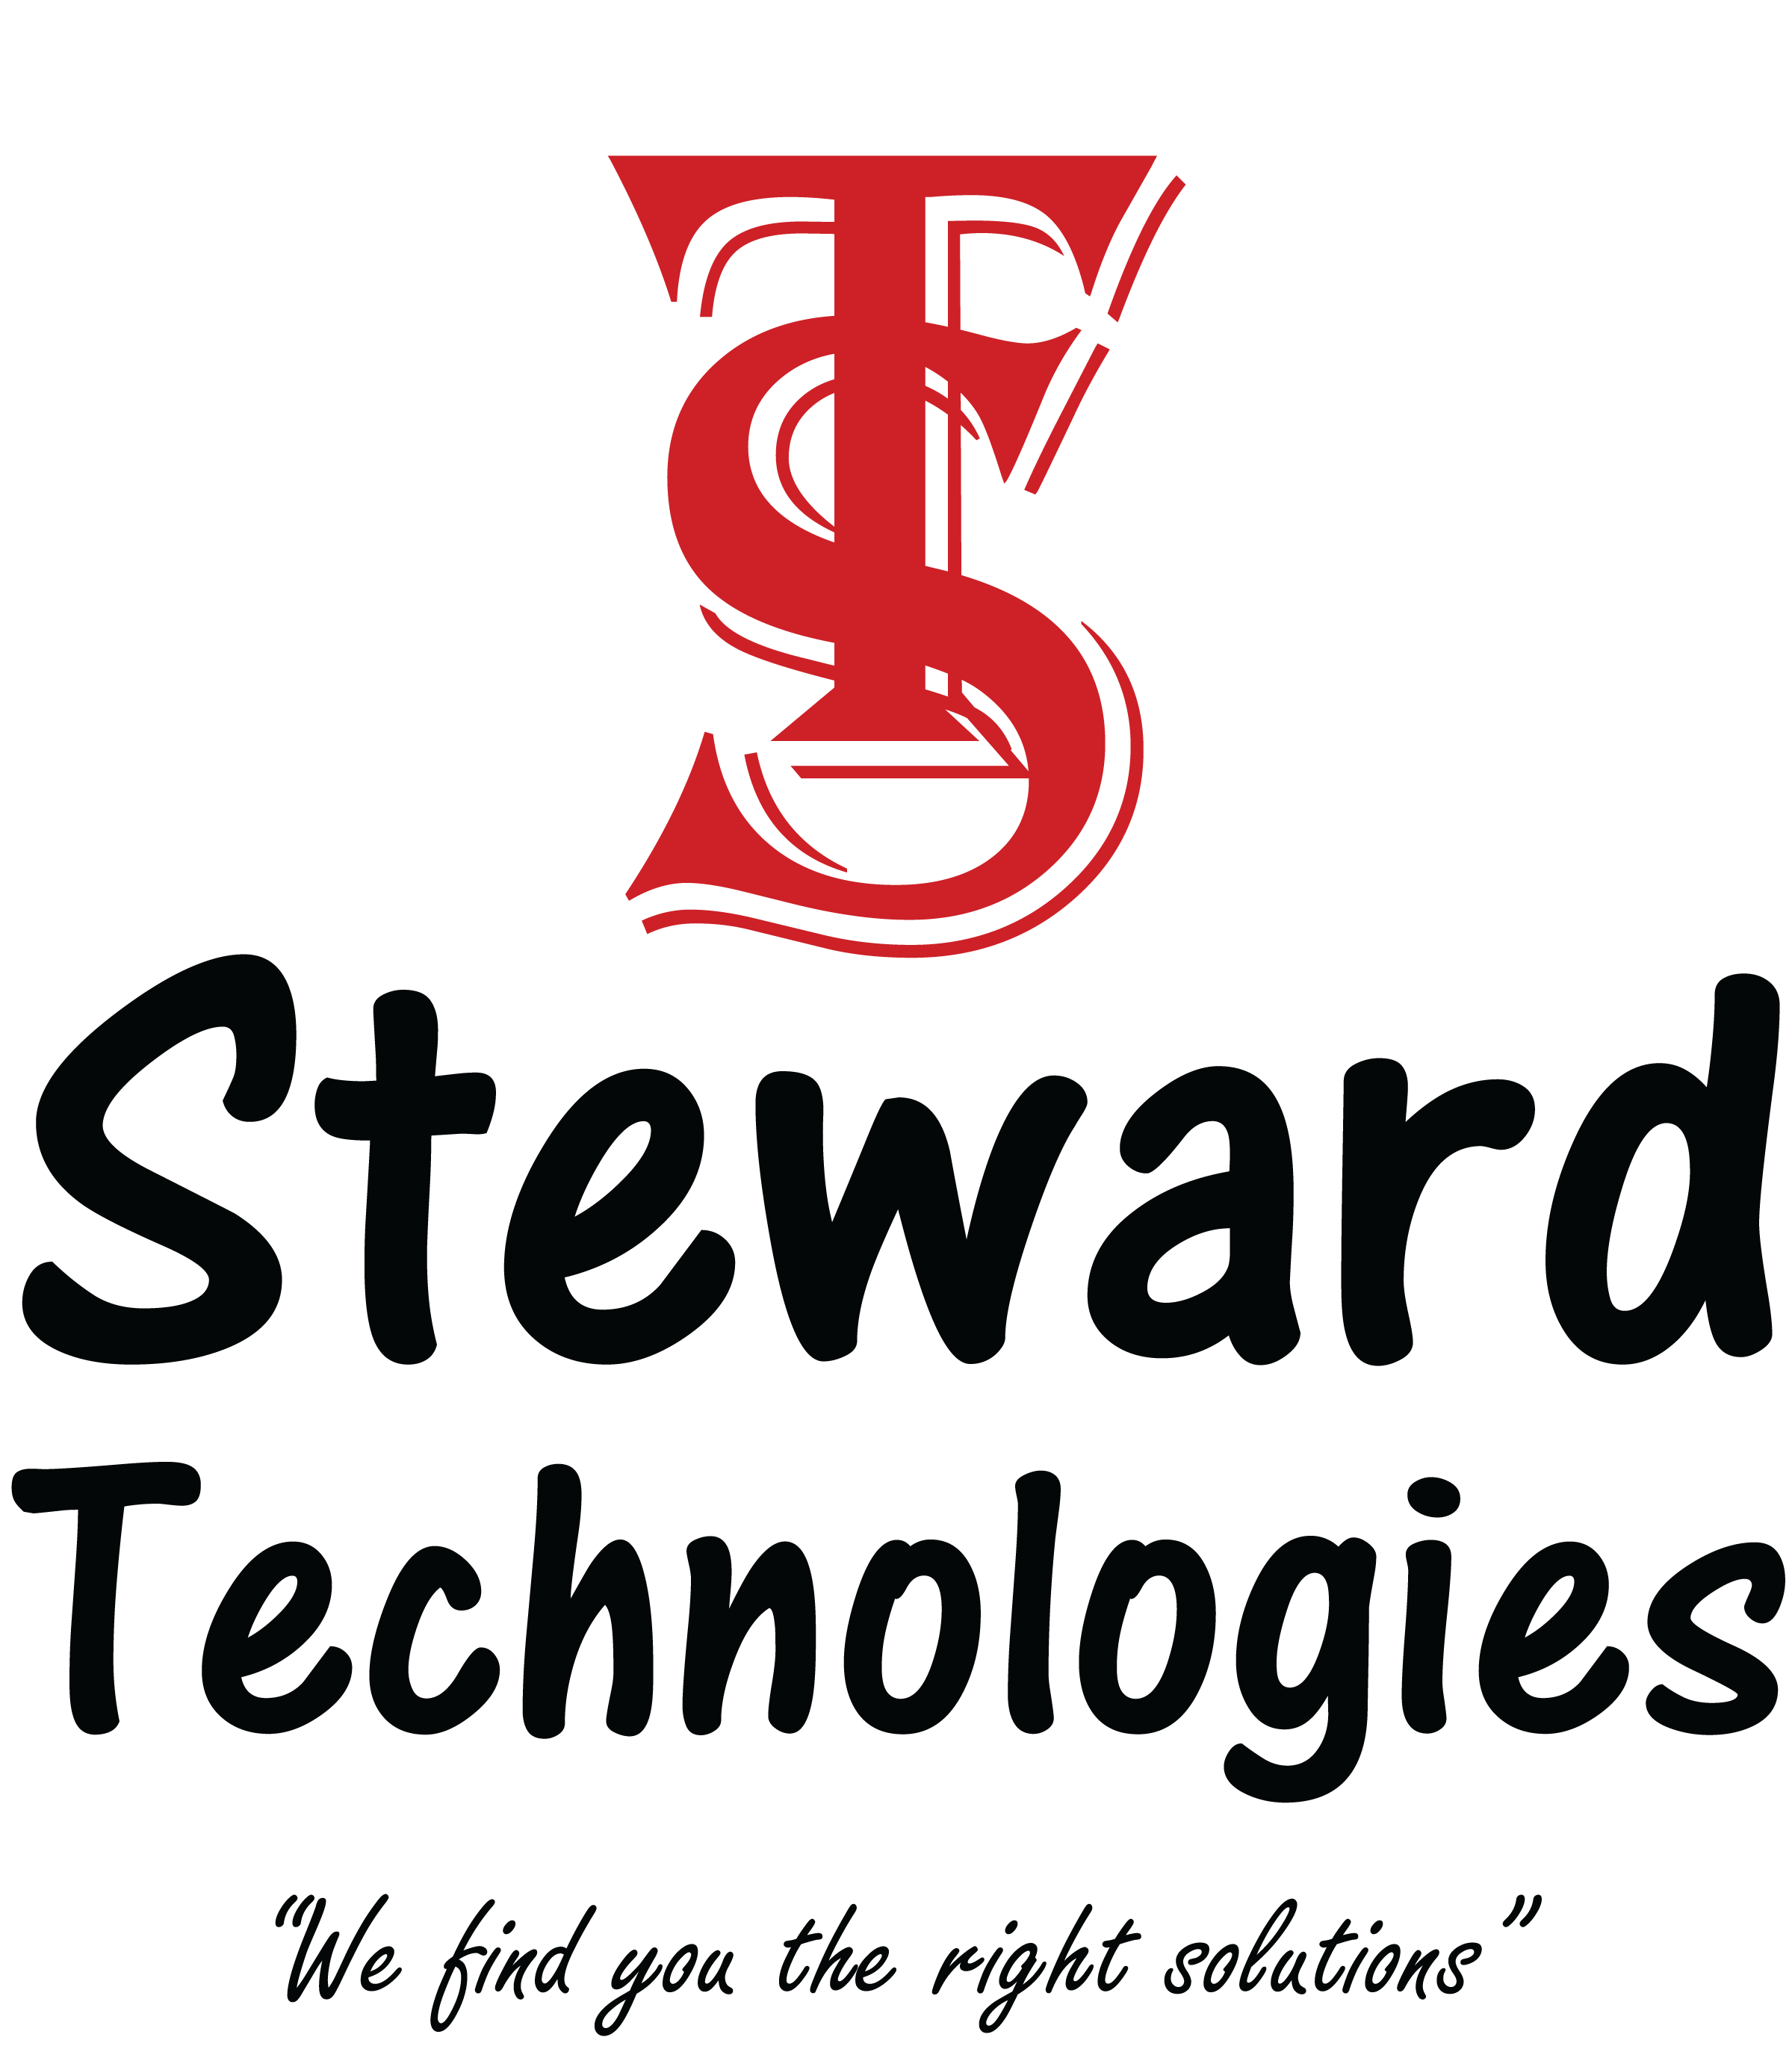 Steward Technologies